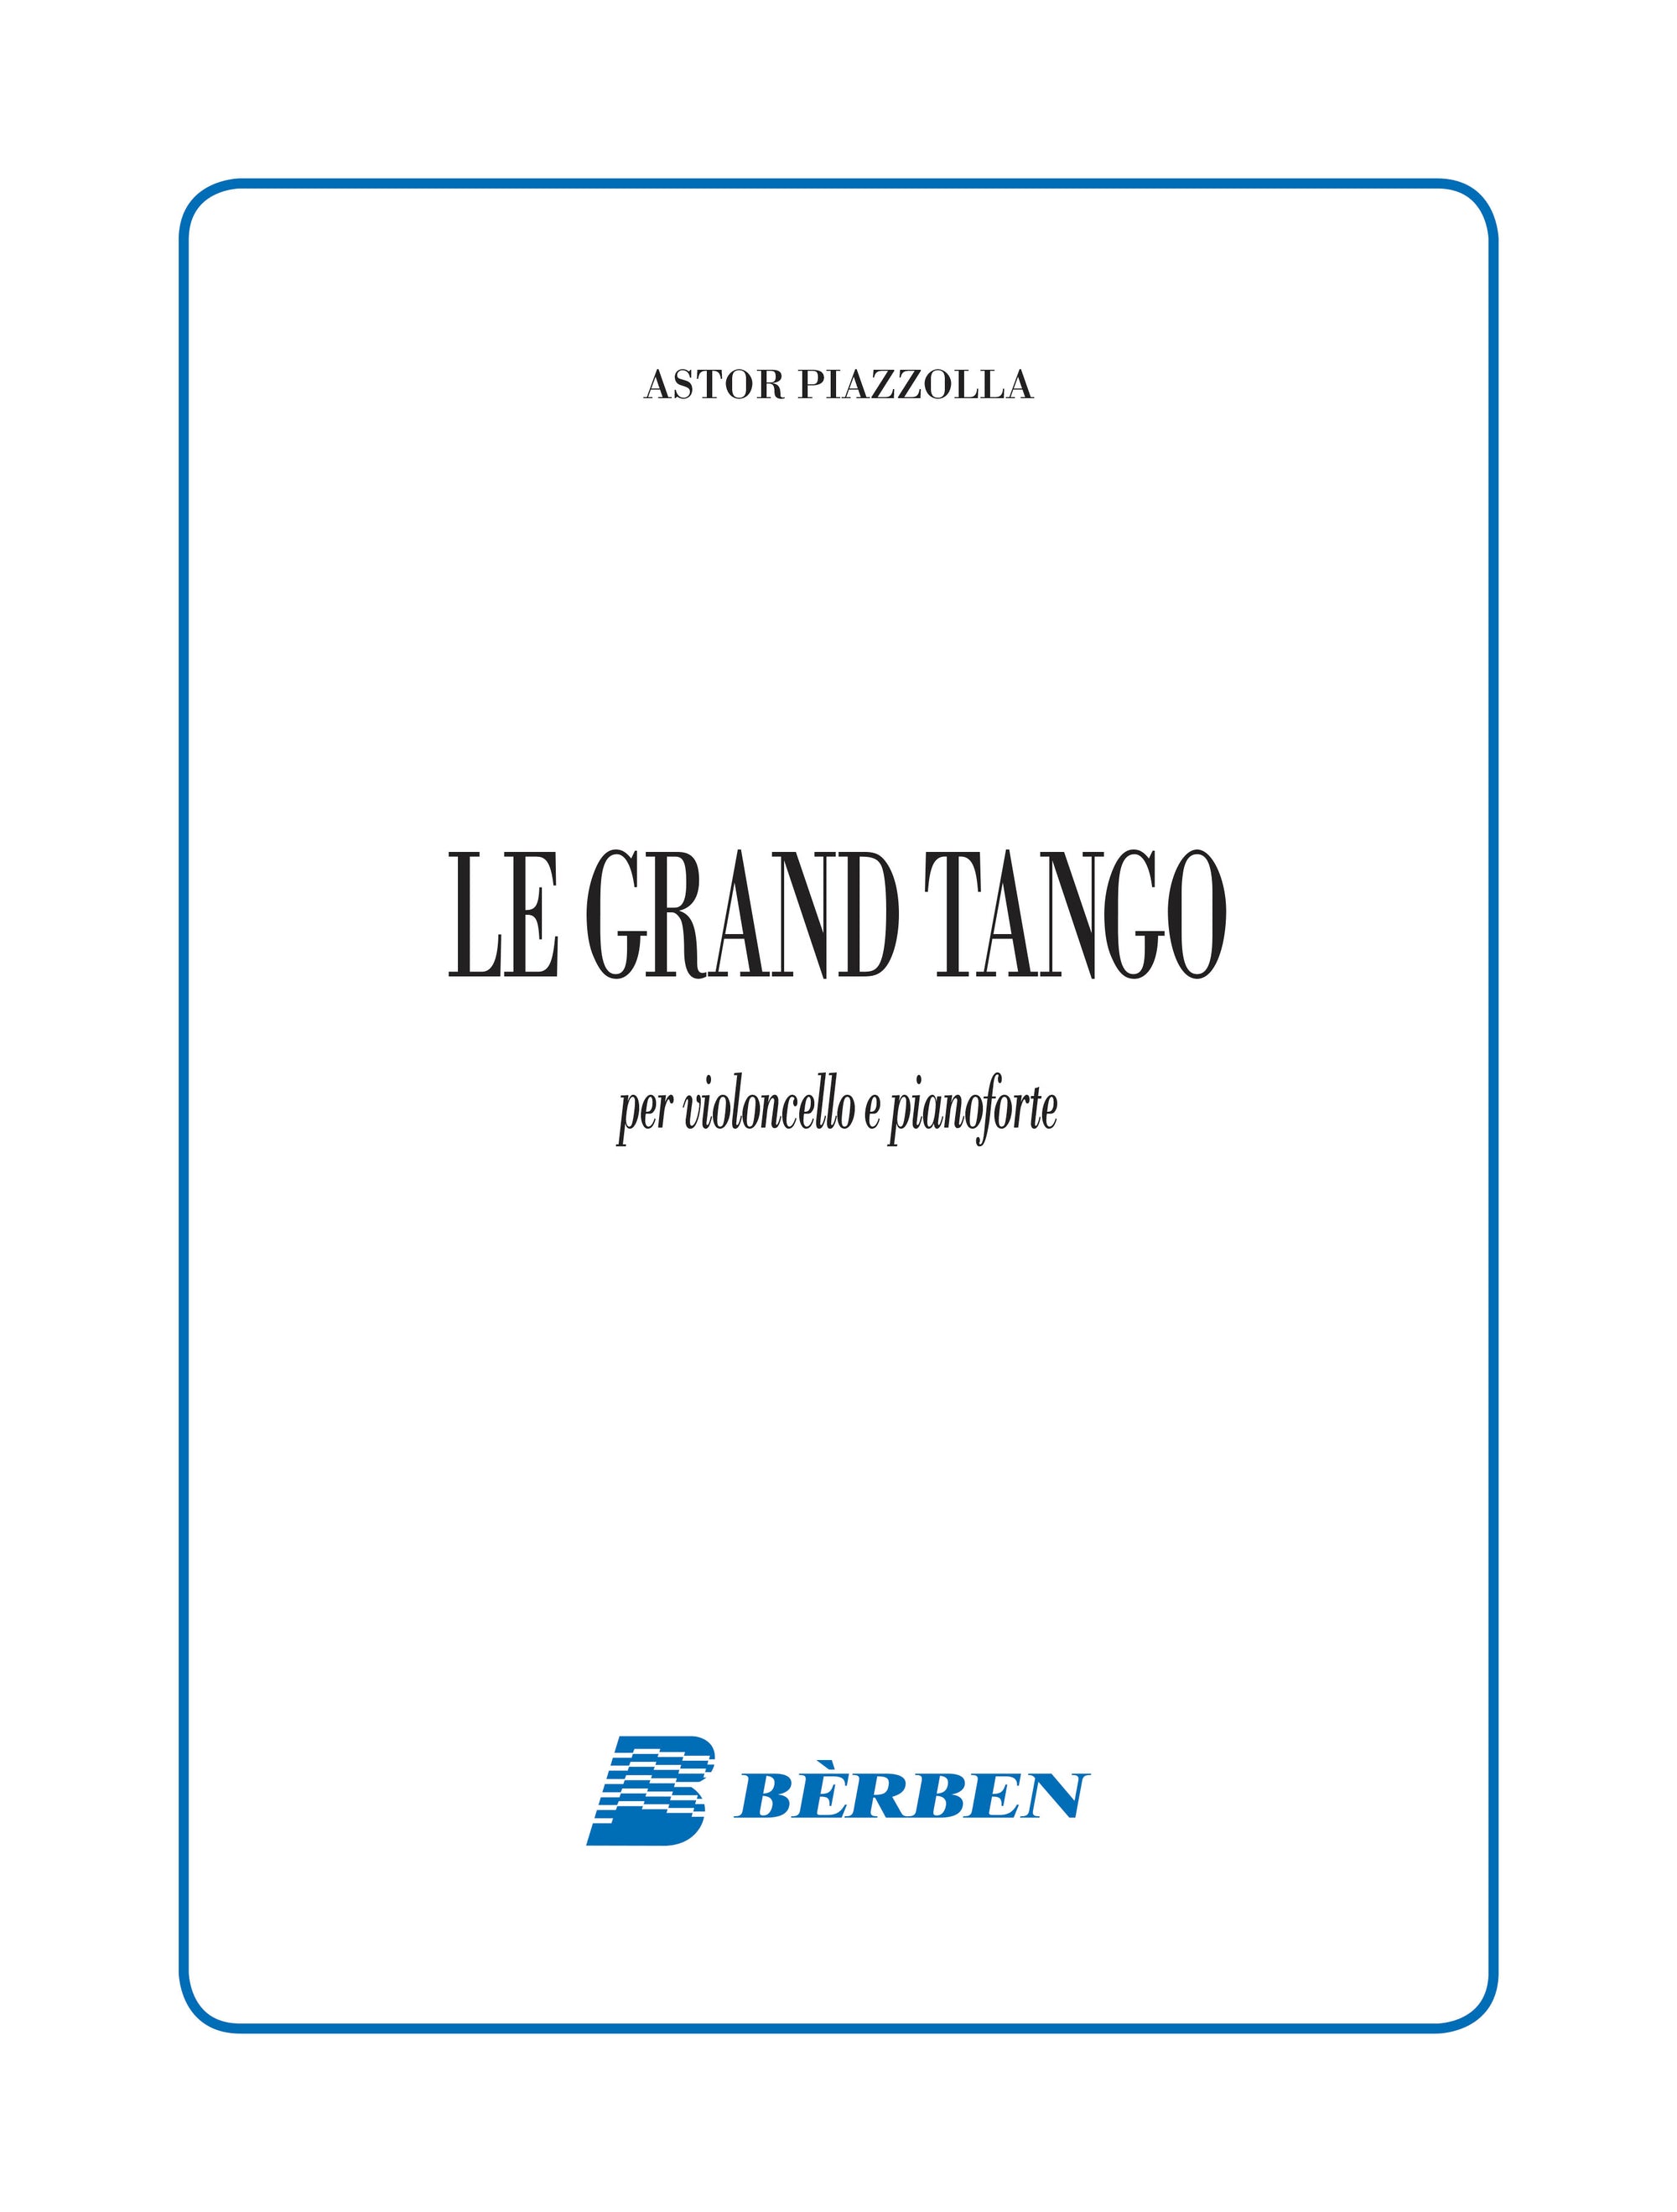 Piazzolla: Le Grand Tango